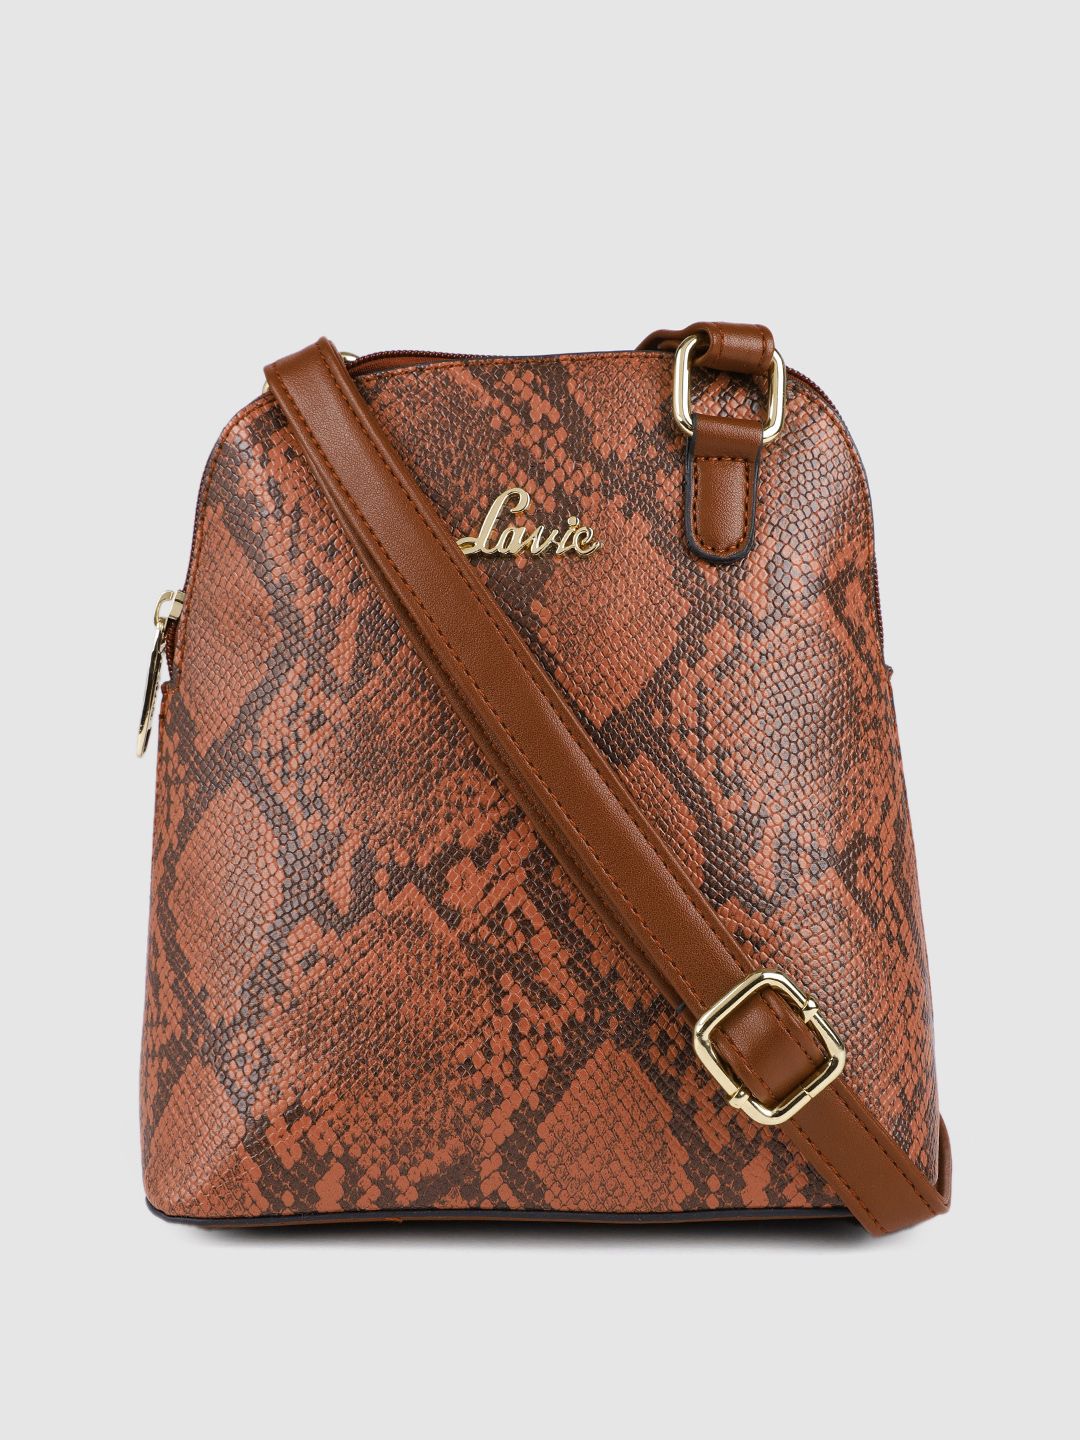 Lavie Brown Textured Sling Bag Price in India